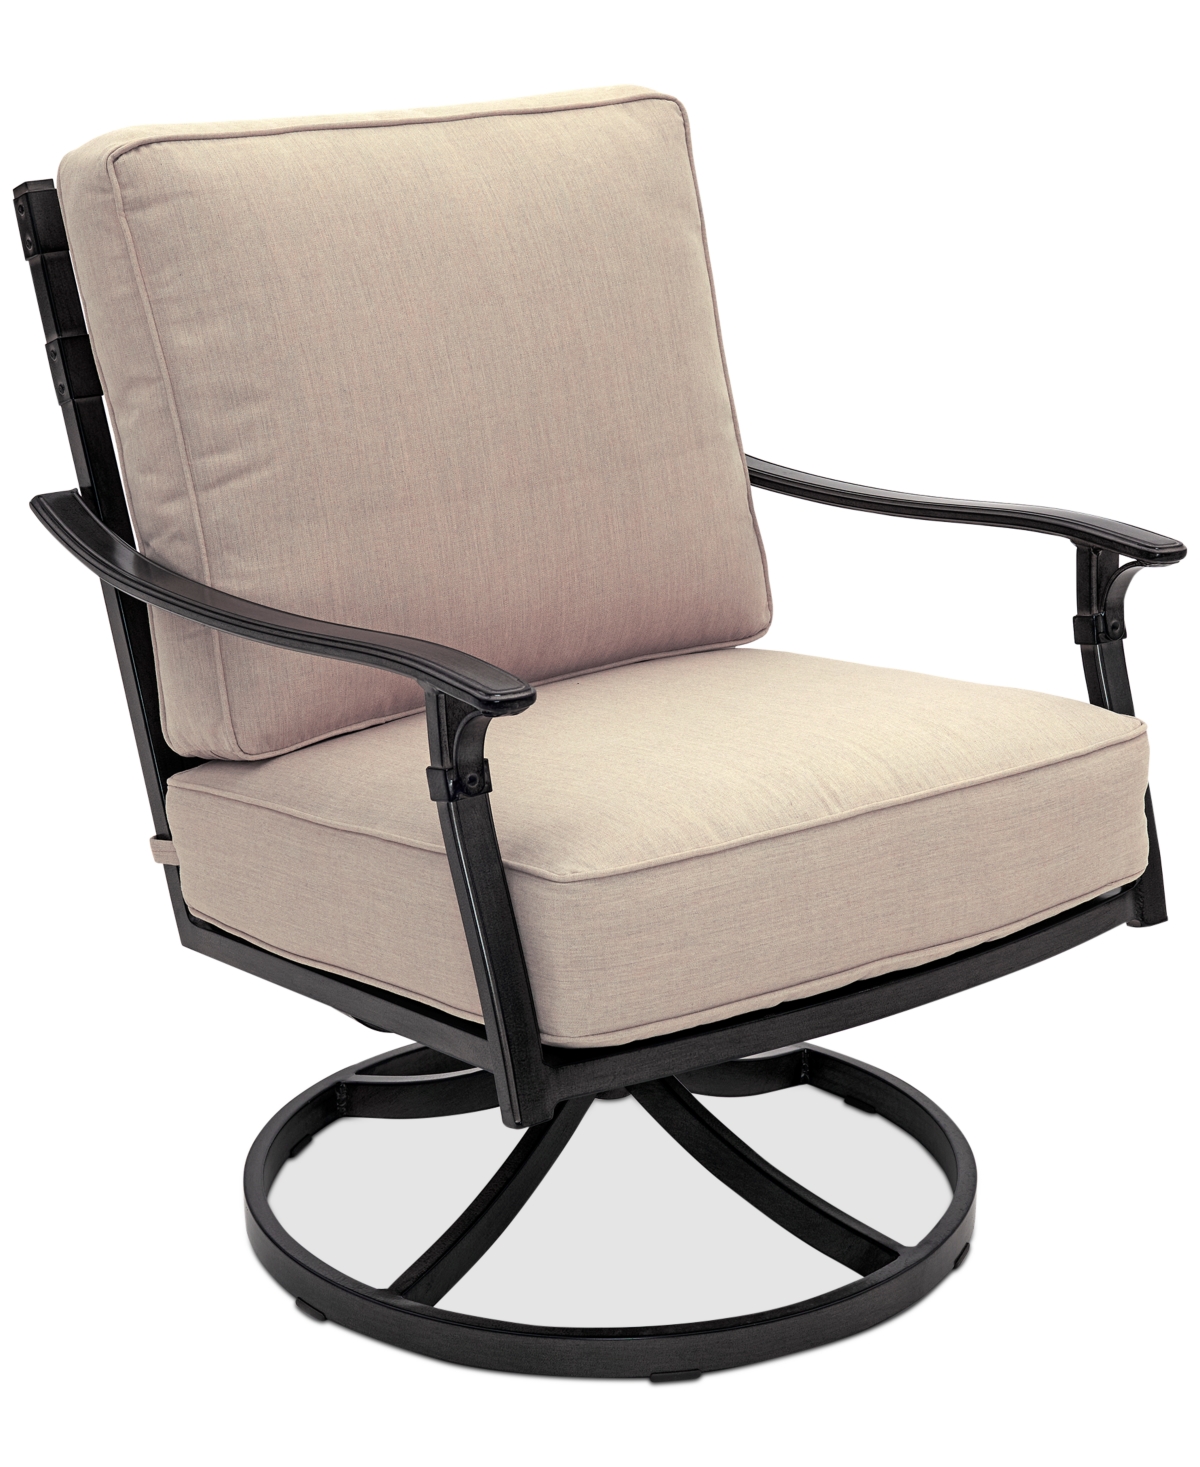 Furniture Lexington Outdoor Swivel Rocker Chair, Created For Macy's